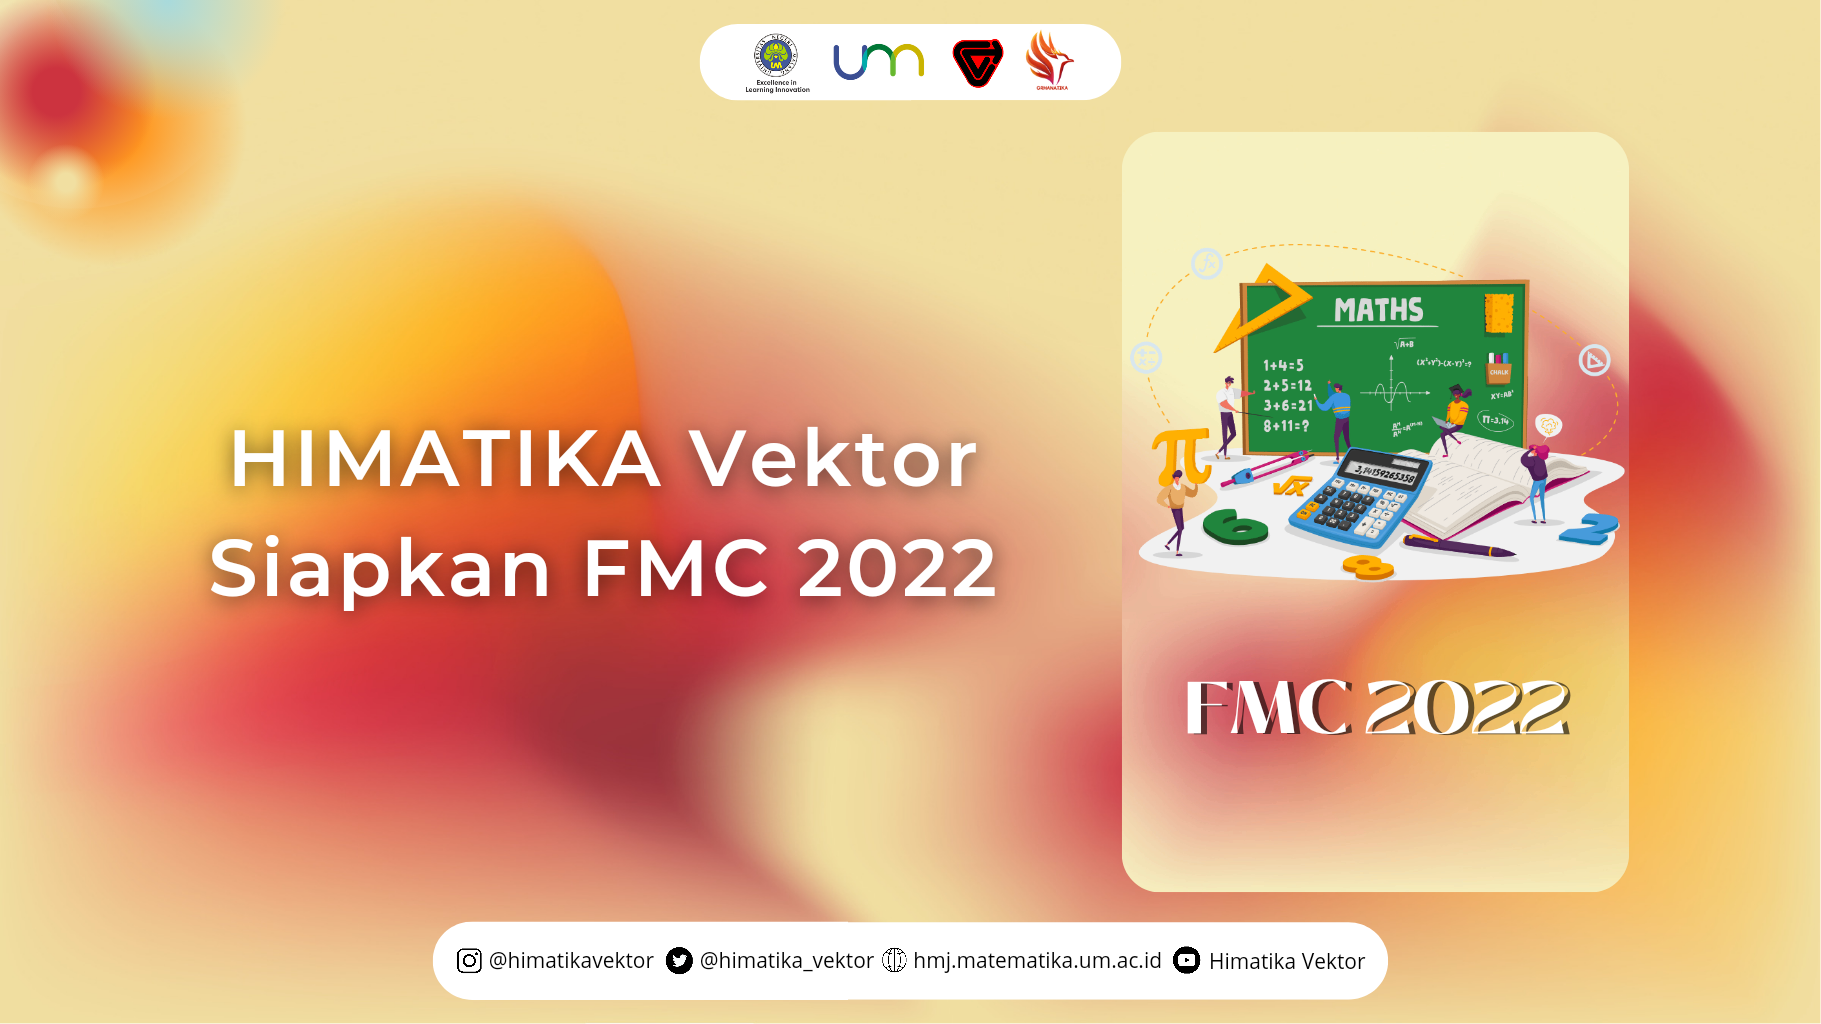 HIMATIKA Vektor Siapkan FMC 2022 dengan Tema “Explore Scientific Insights with Fun Mathematics Competition”